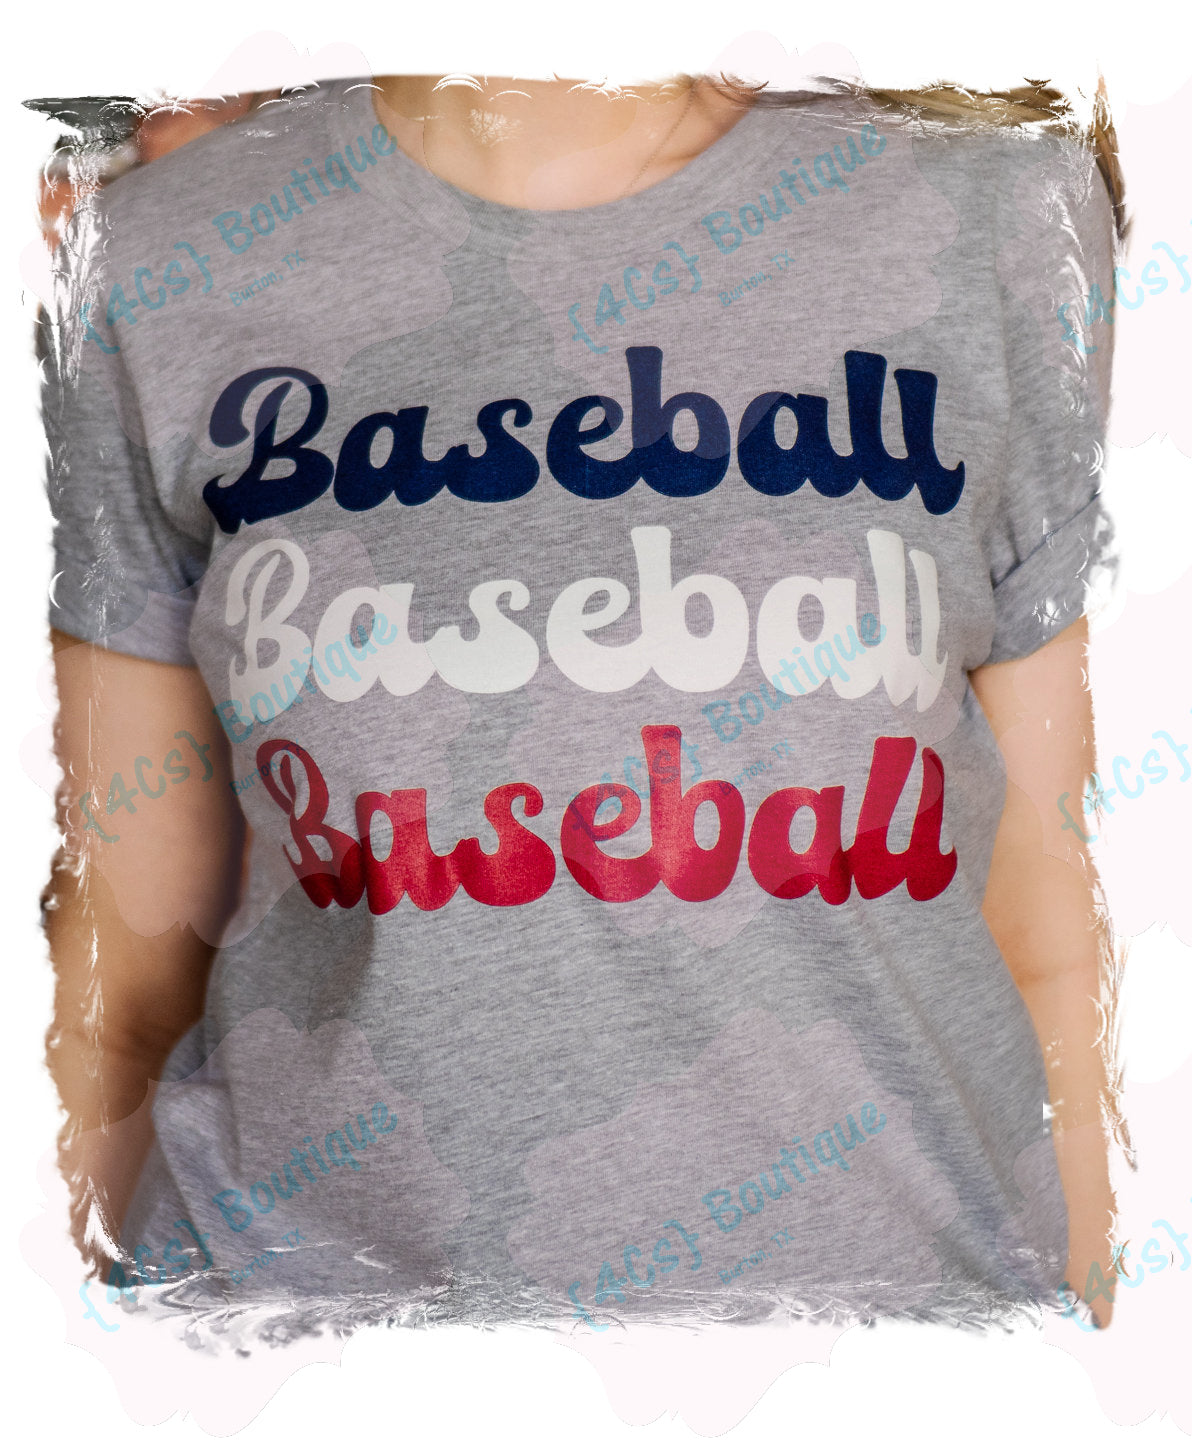 Baseball Baseball Baseball Shirt